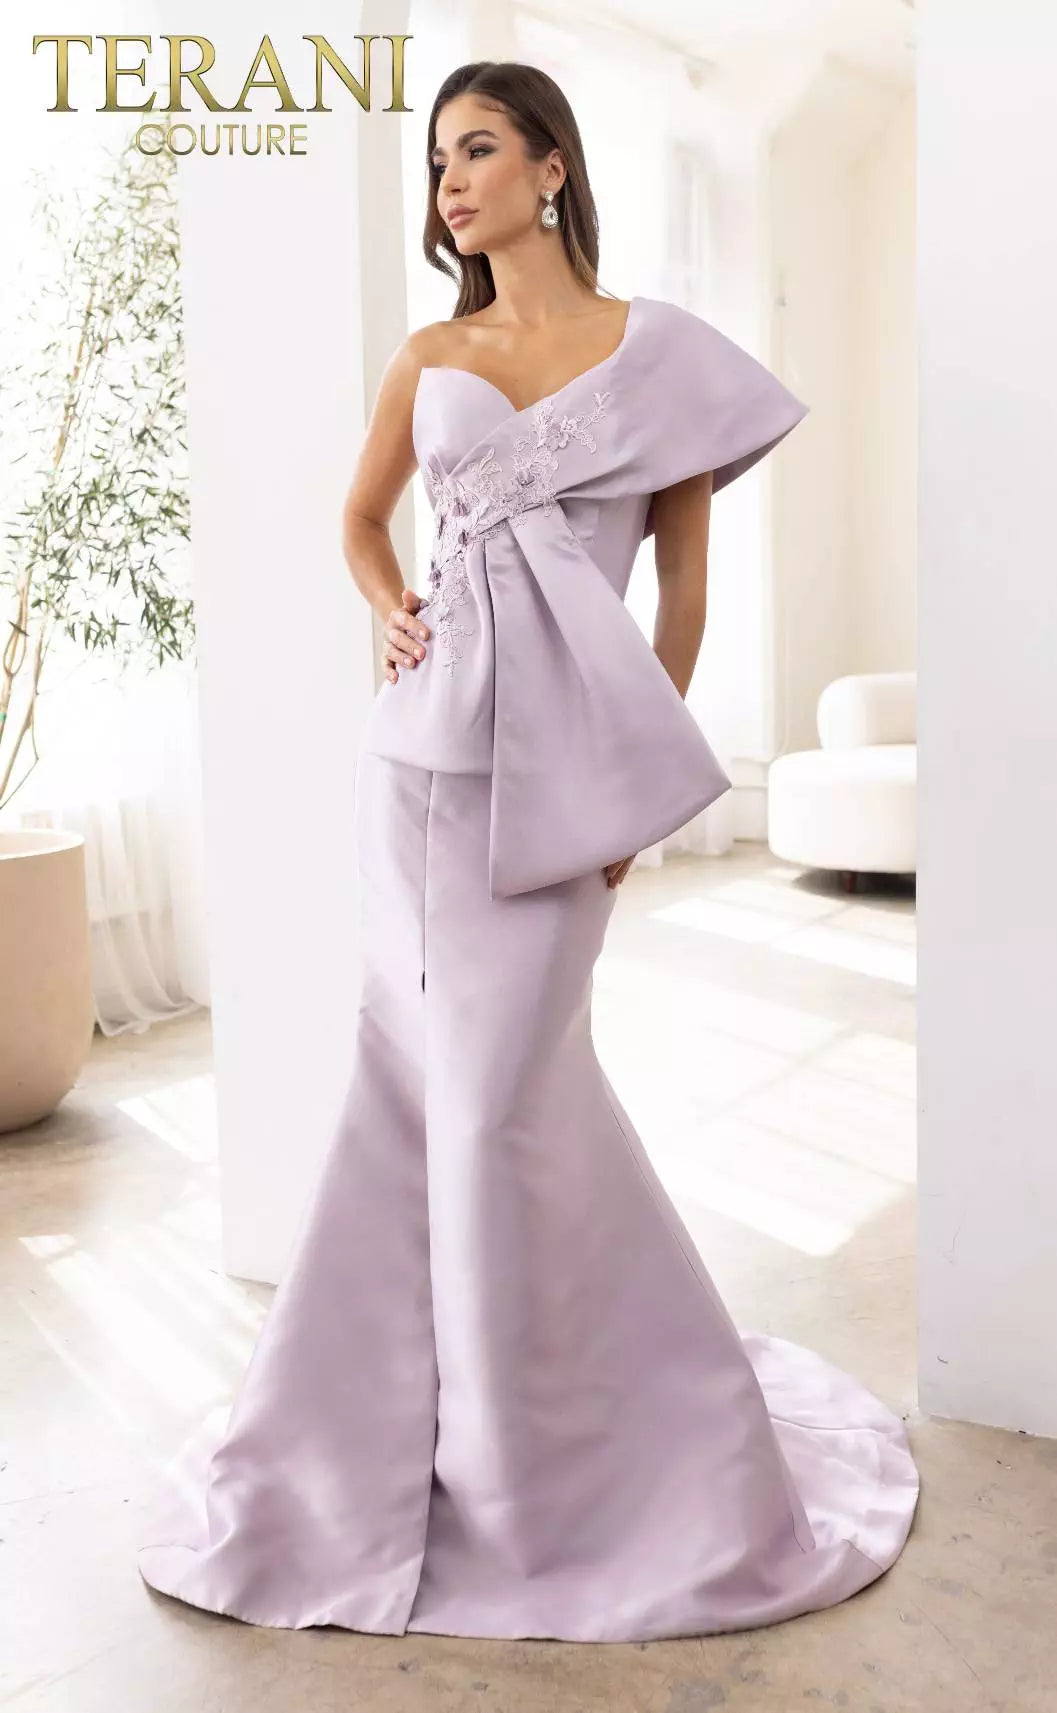 Terani Couture 241E2468 Off-Shoulder Trumpet Asymmetrical Sparkly Column Evening Dress B Chic Fashions Long Dress Evening Gowns